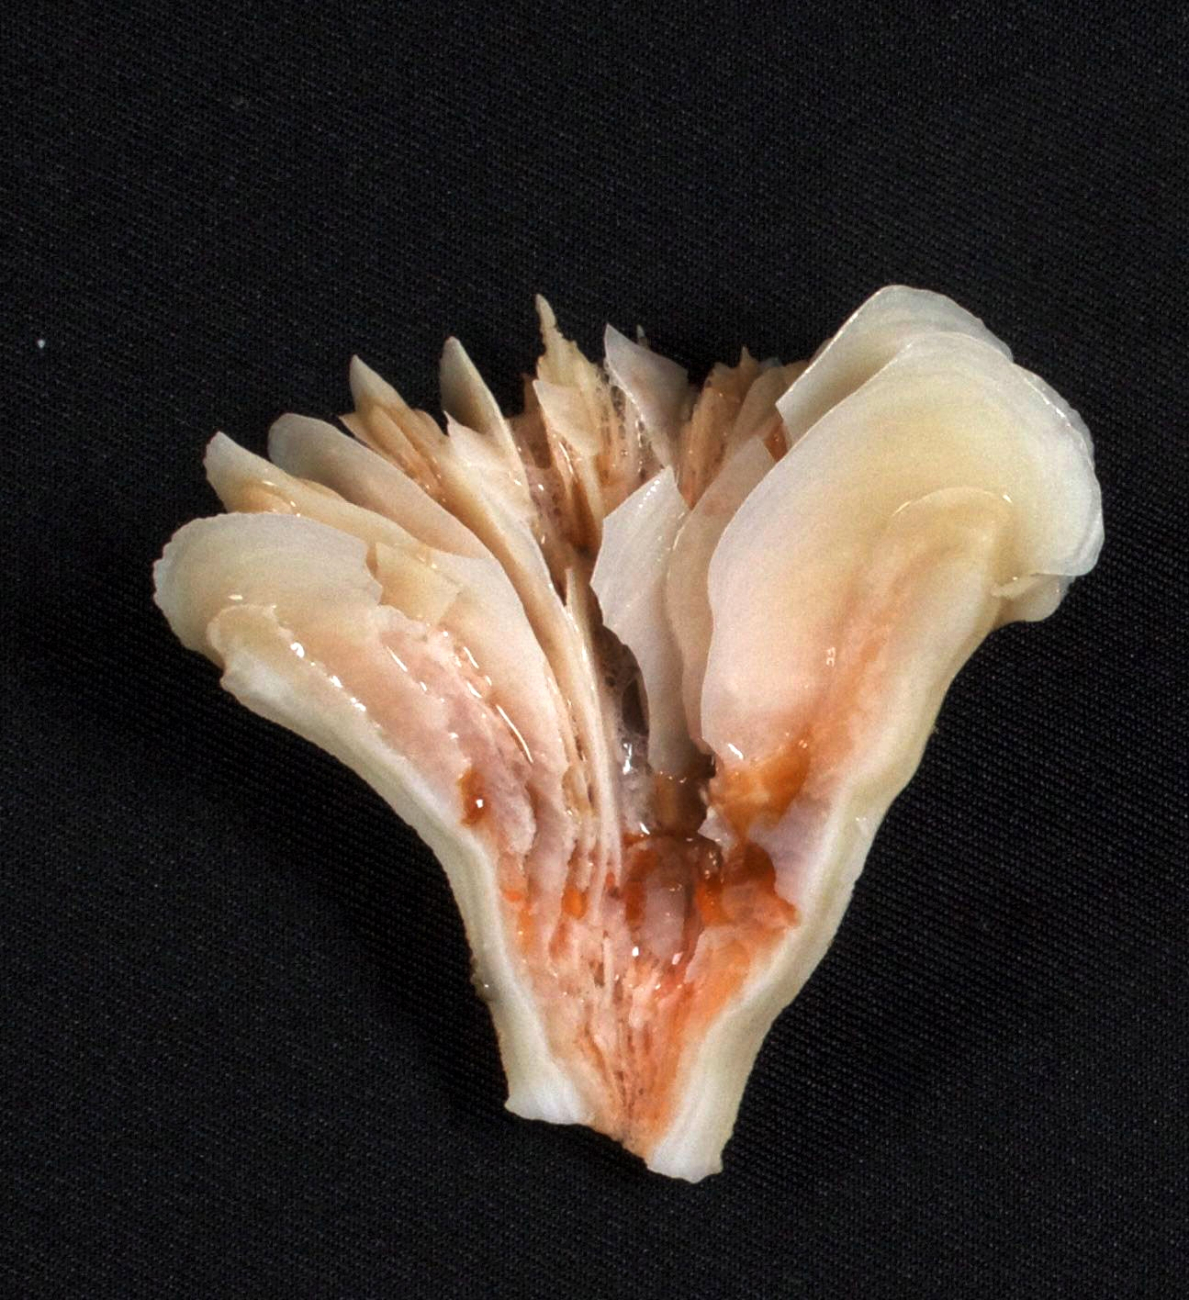 A cross-section view of Desmophyllum, revealing its internal structure